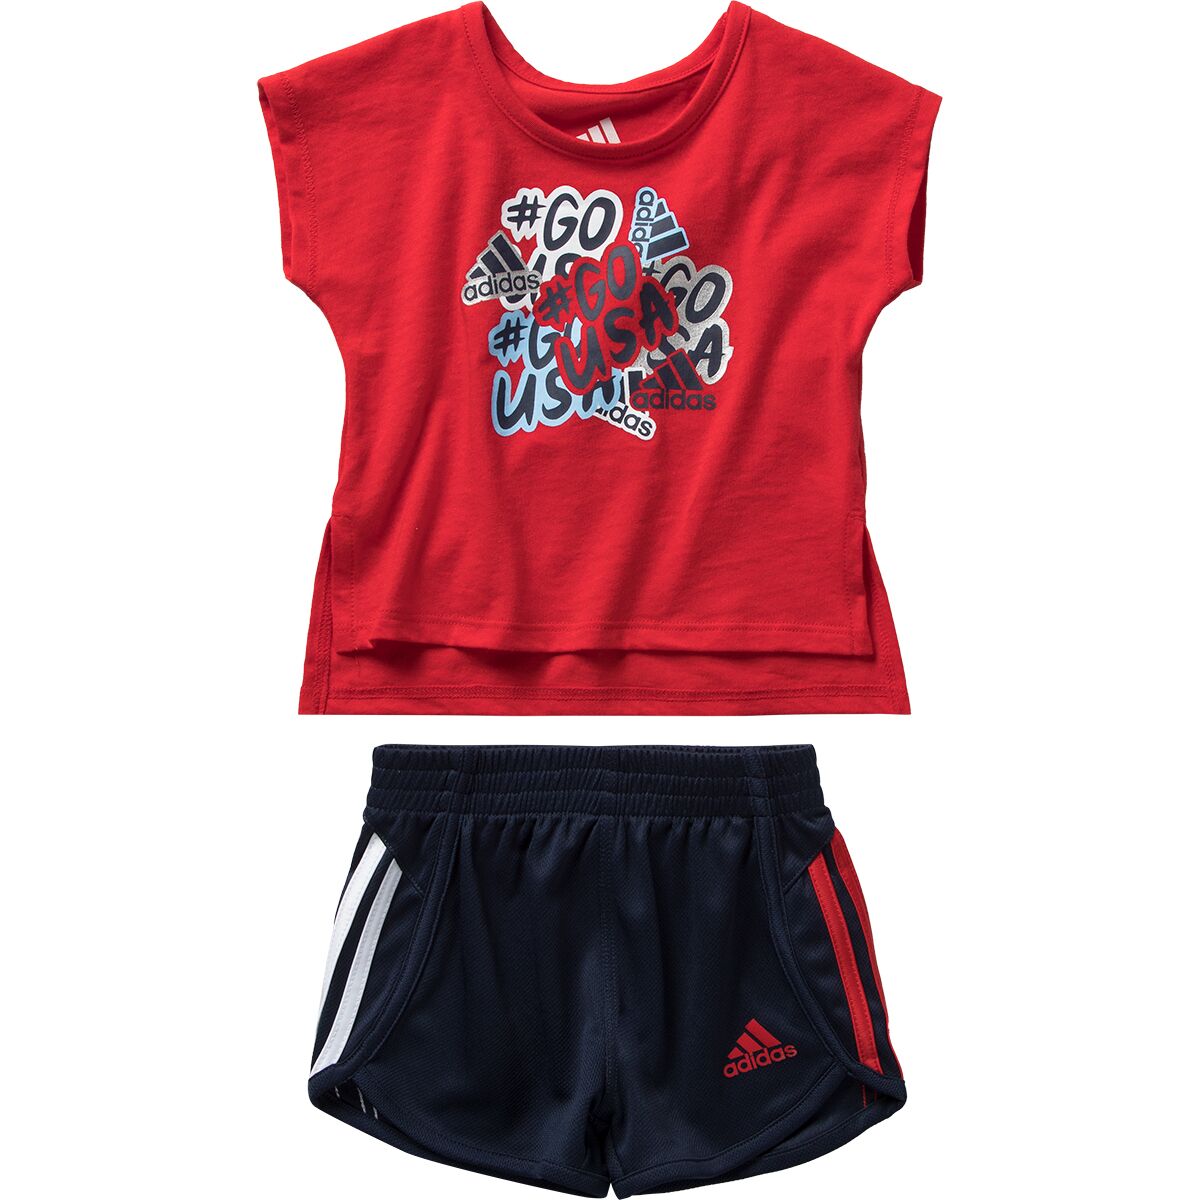 Adidas Graphic T-Shirt Mesh Short Set - Infant Girls'